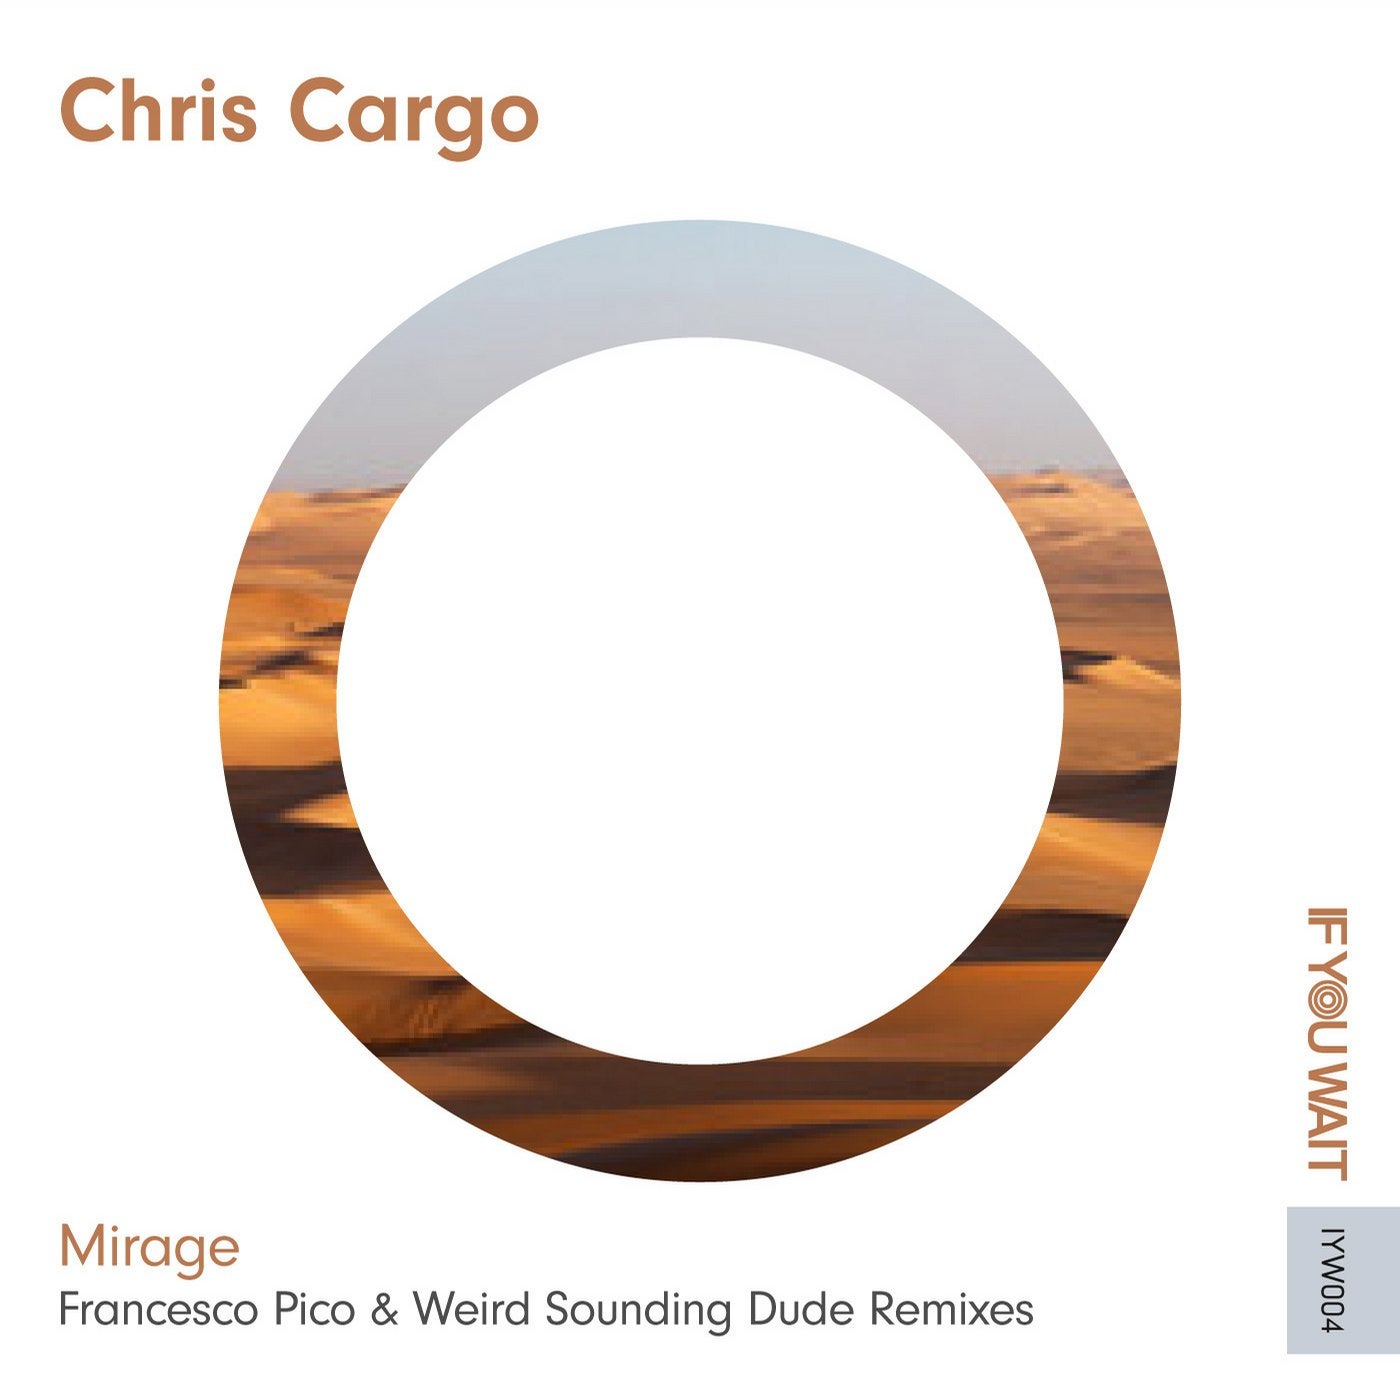 'Mirage' the Remixes